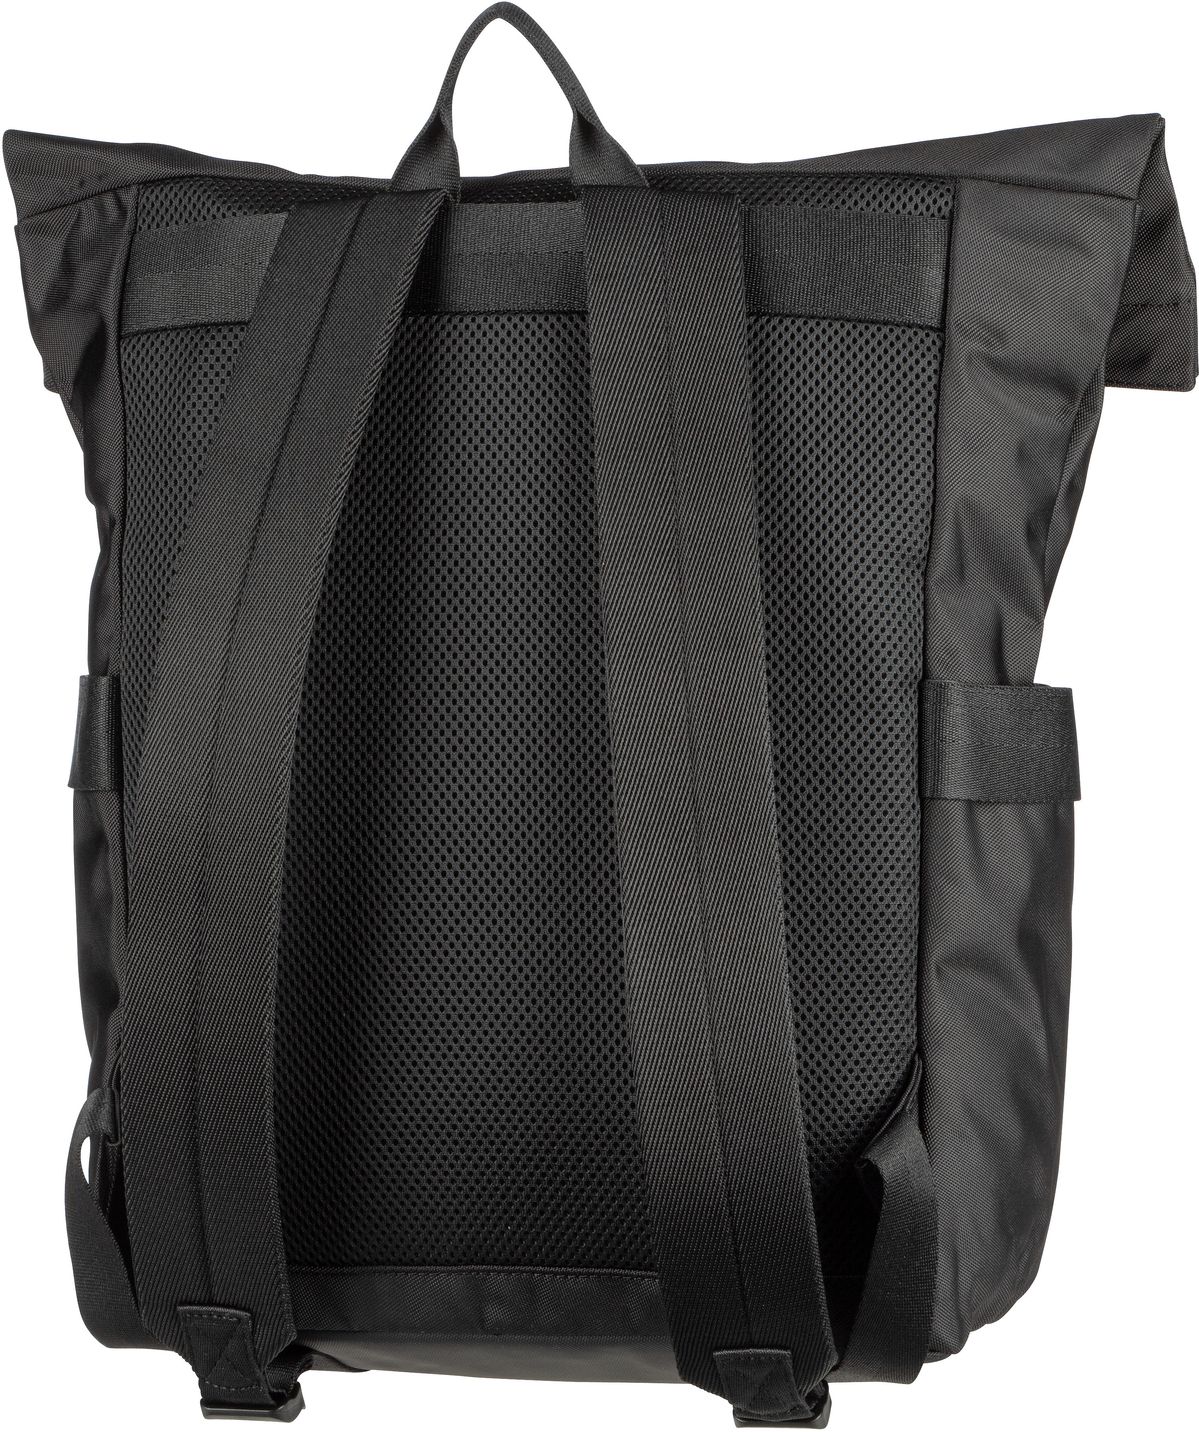 Lacoste Outdoor Croc Sailor Backpack - Black